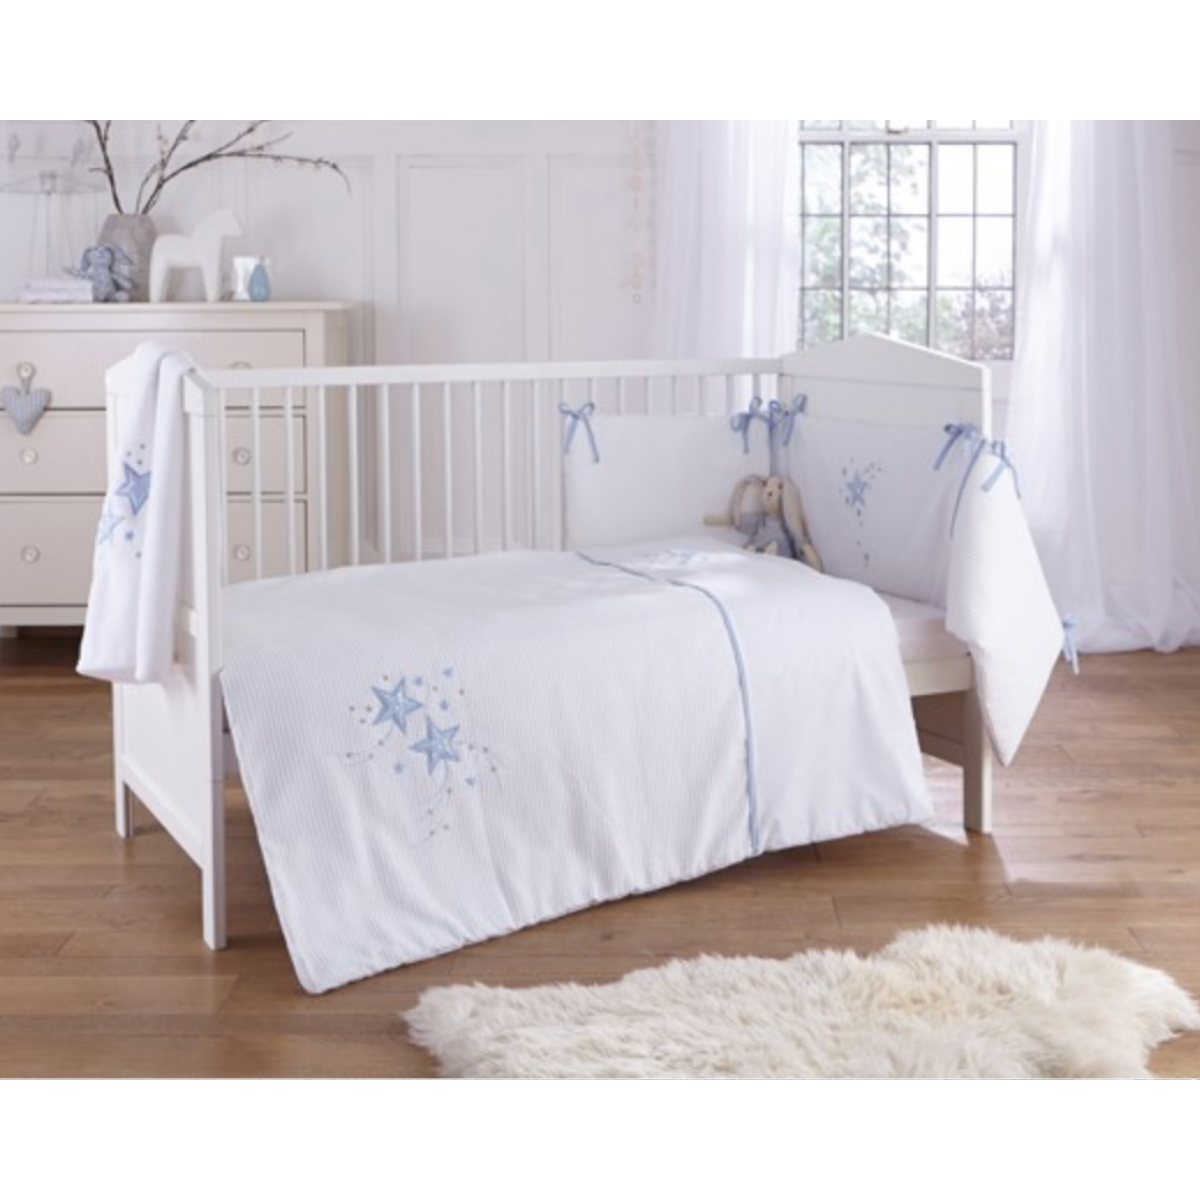 Cot/Cot Bed Bedding Bale - Blue 